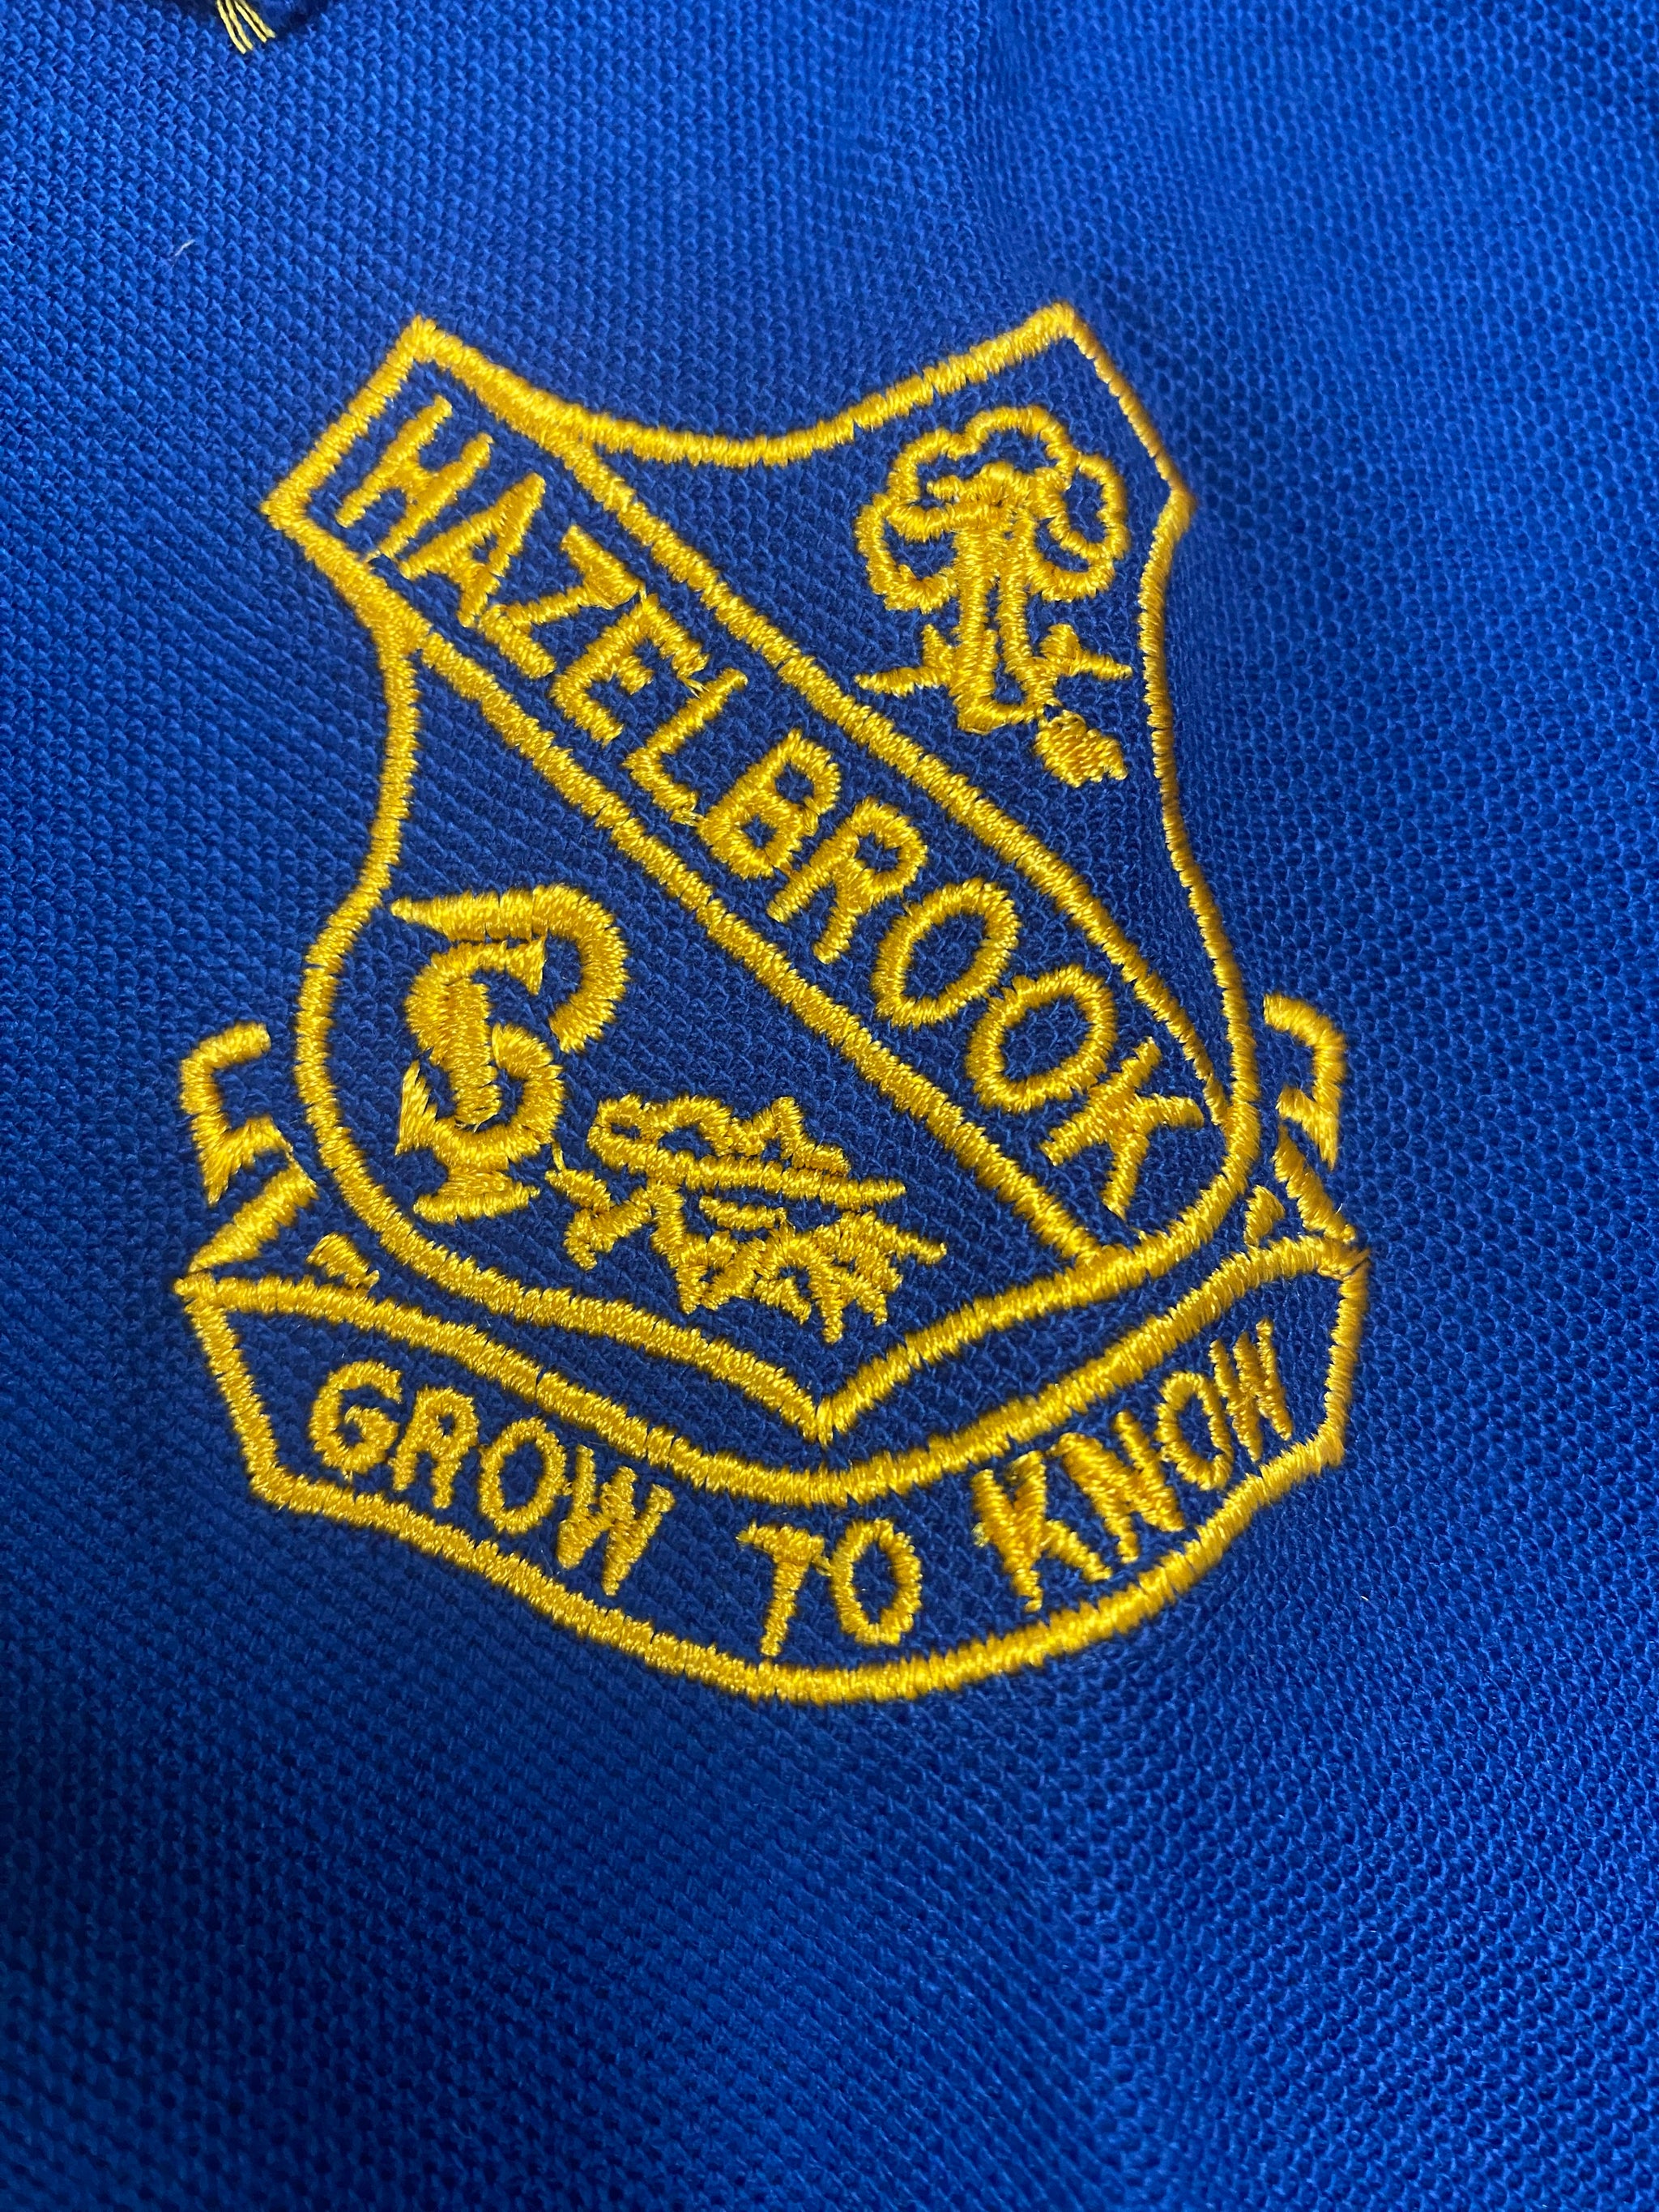 Hazelbrook Public School Polo Shirt